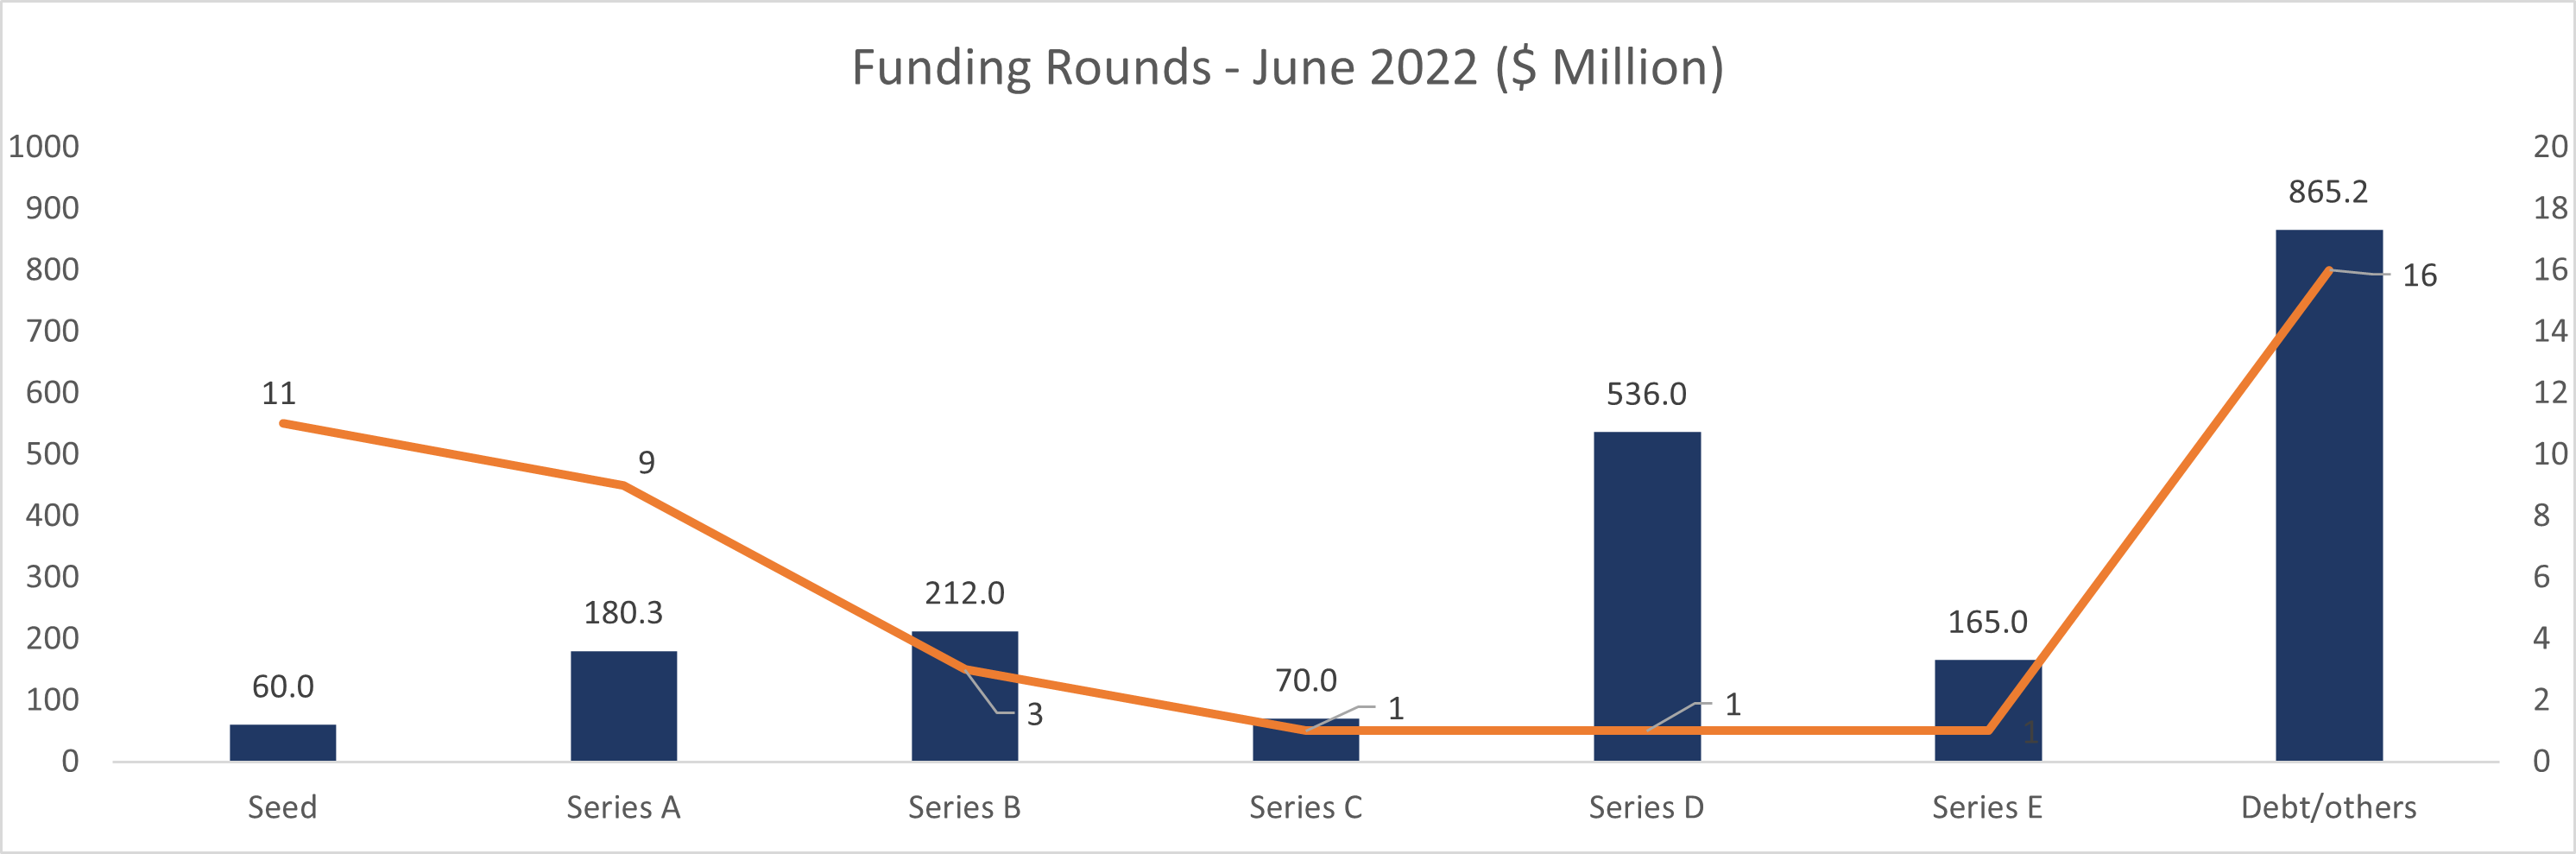 Funding Rounds - June 2022